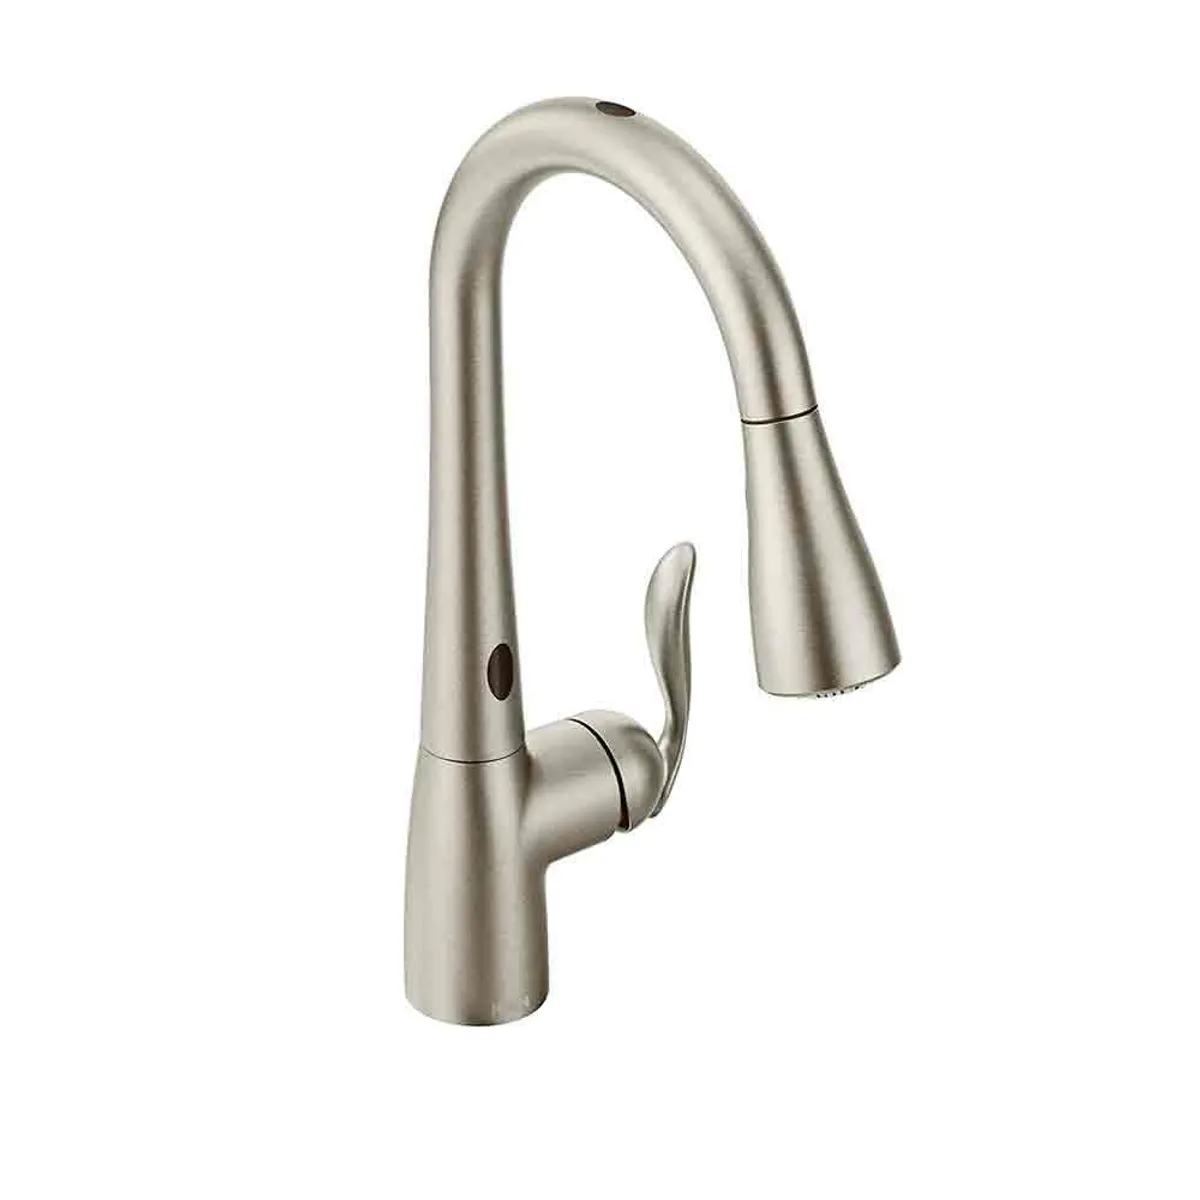 Moen 7594ESRS MotionSense Faucet to Buy Review